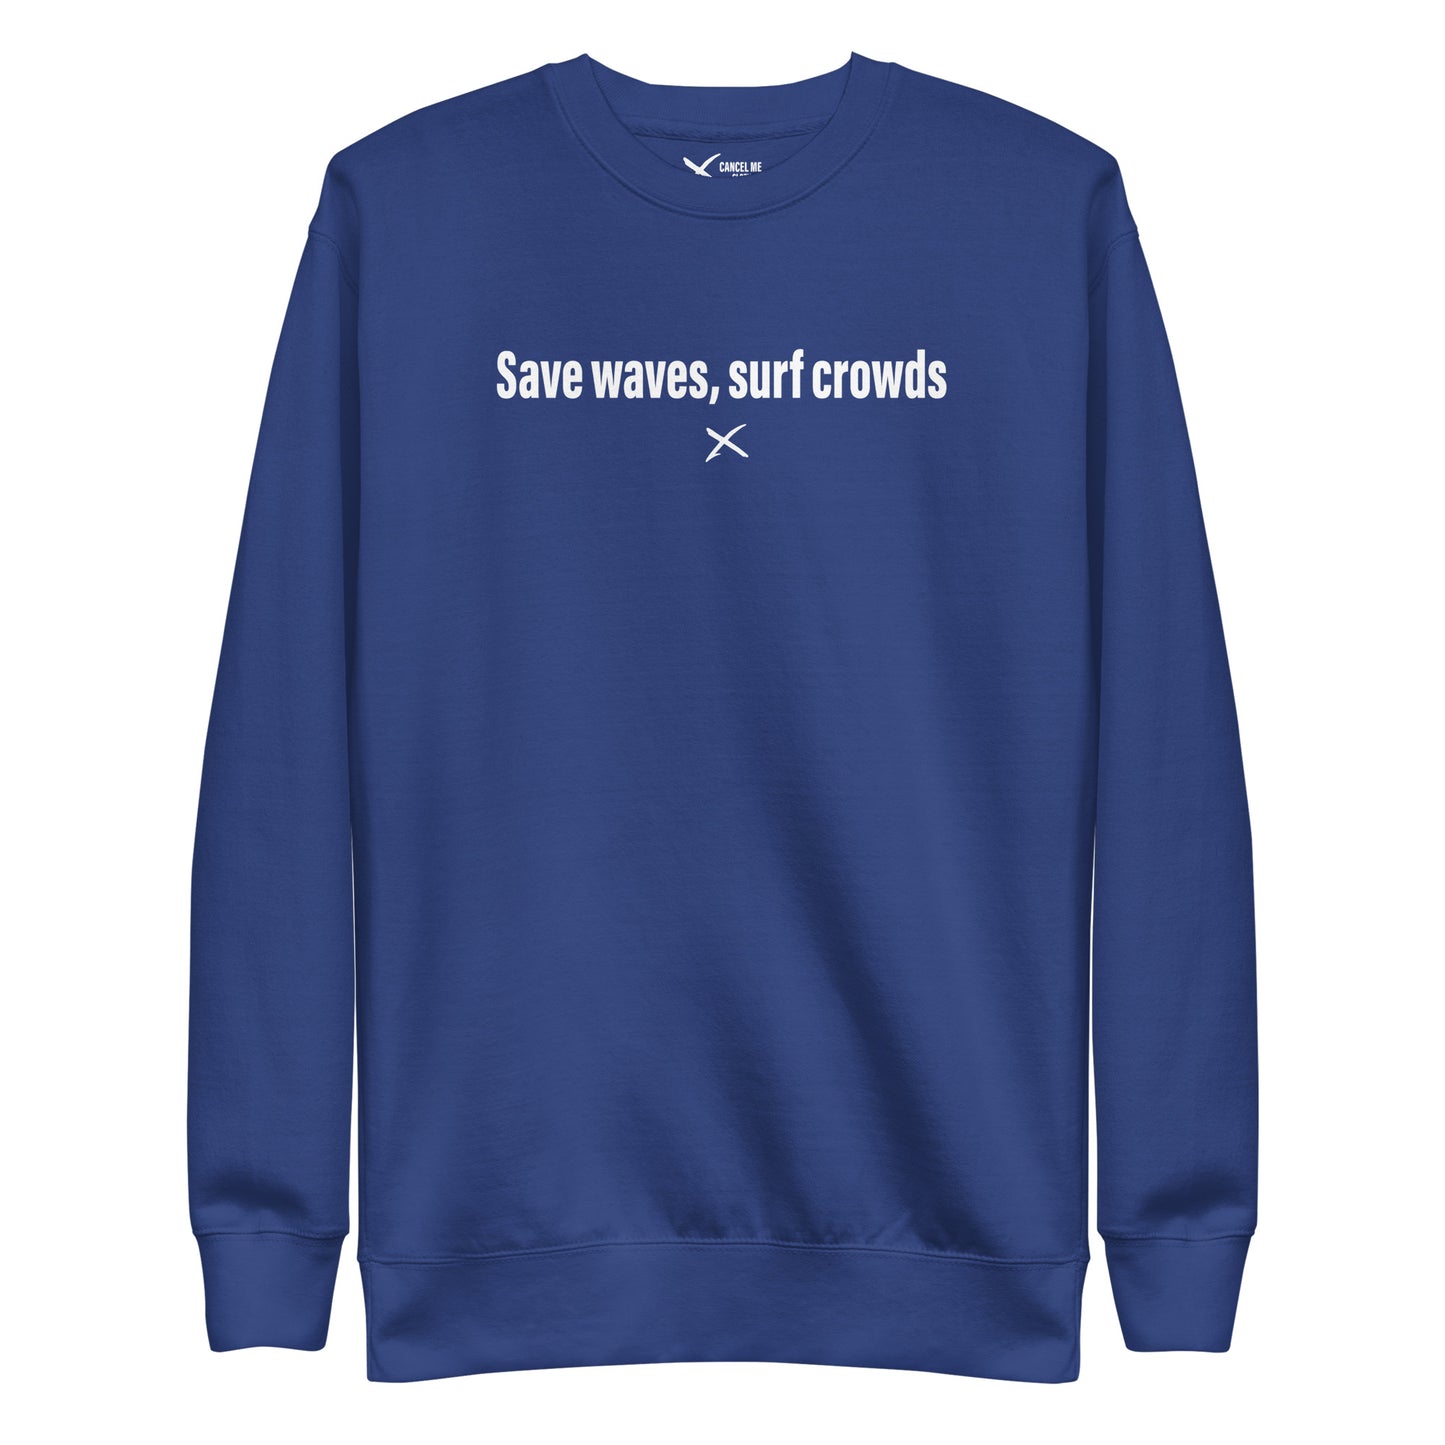 Save waves, surf crowds - Sweatshirt